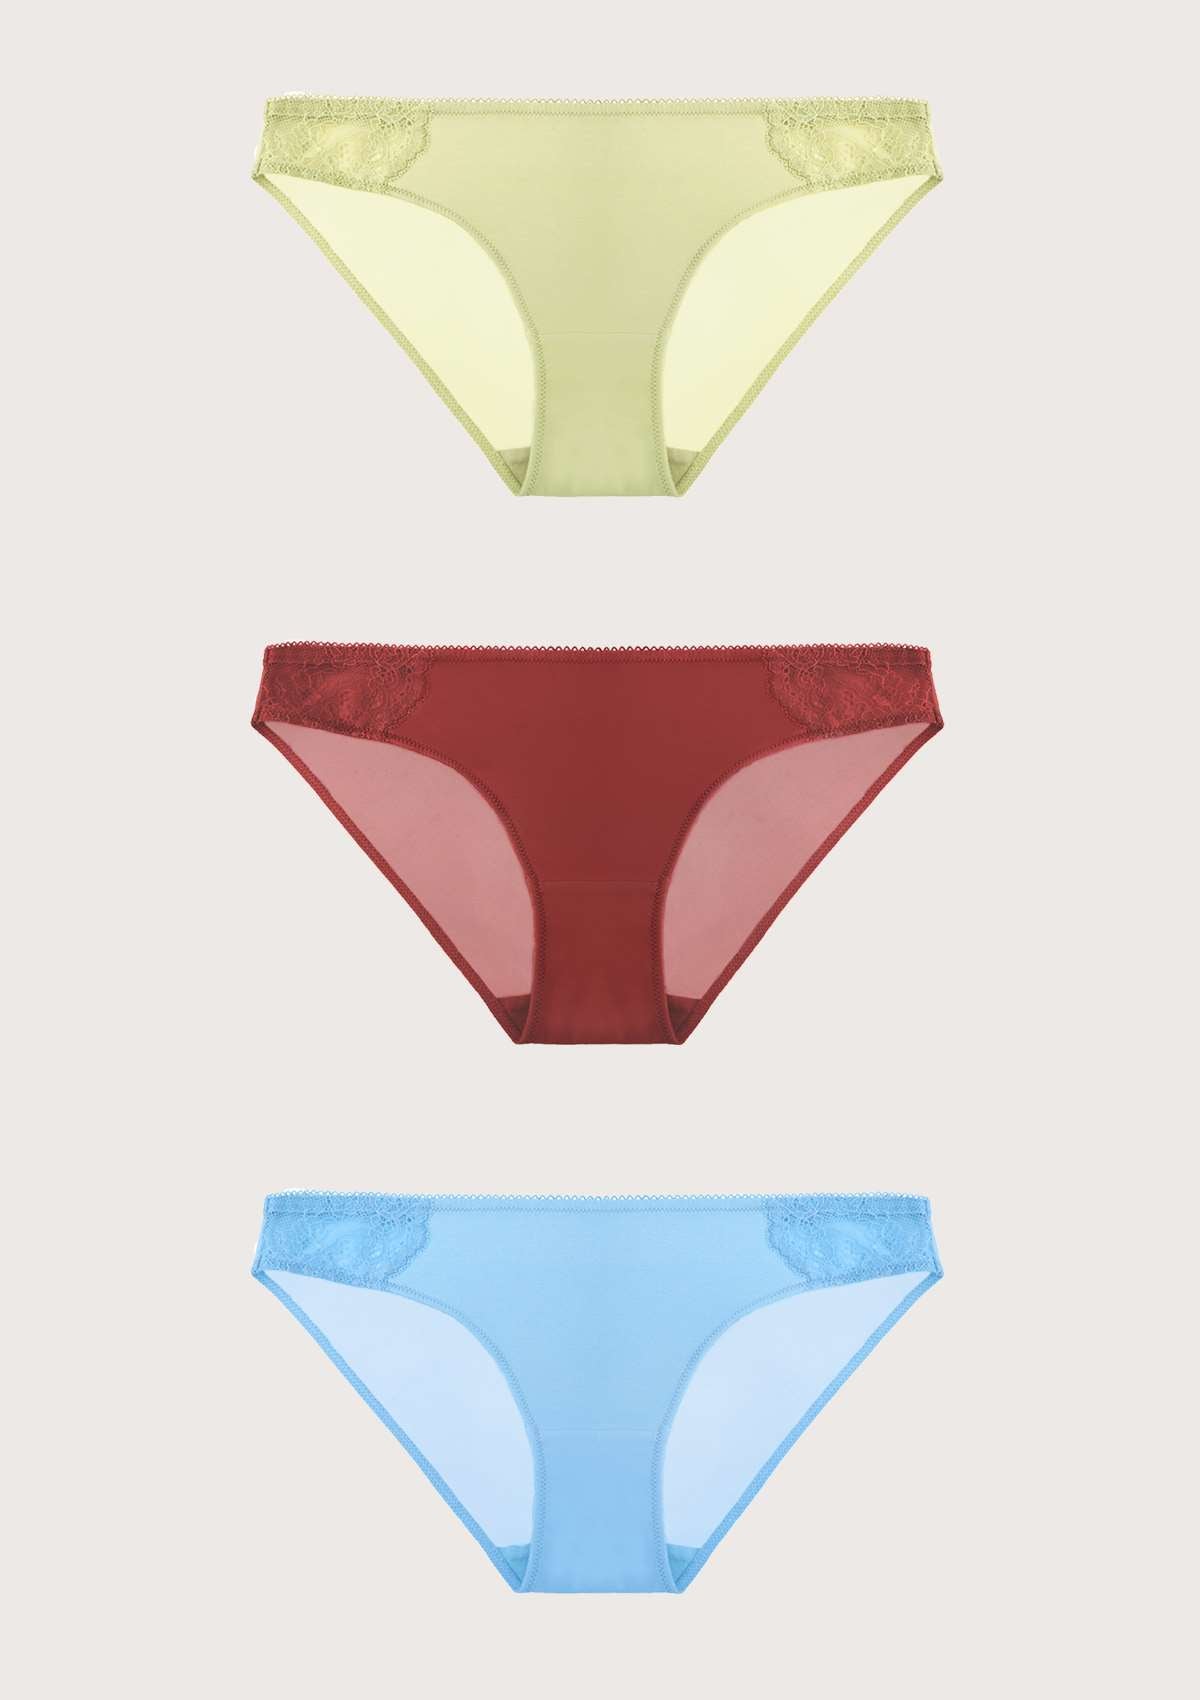 HSIA Soft Stretch Lace Bikini Panties 3 Pack - M / Light Green+Crimson+Light Blue